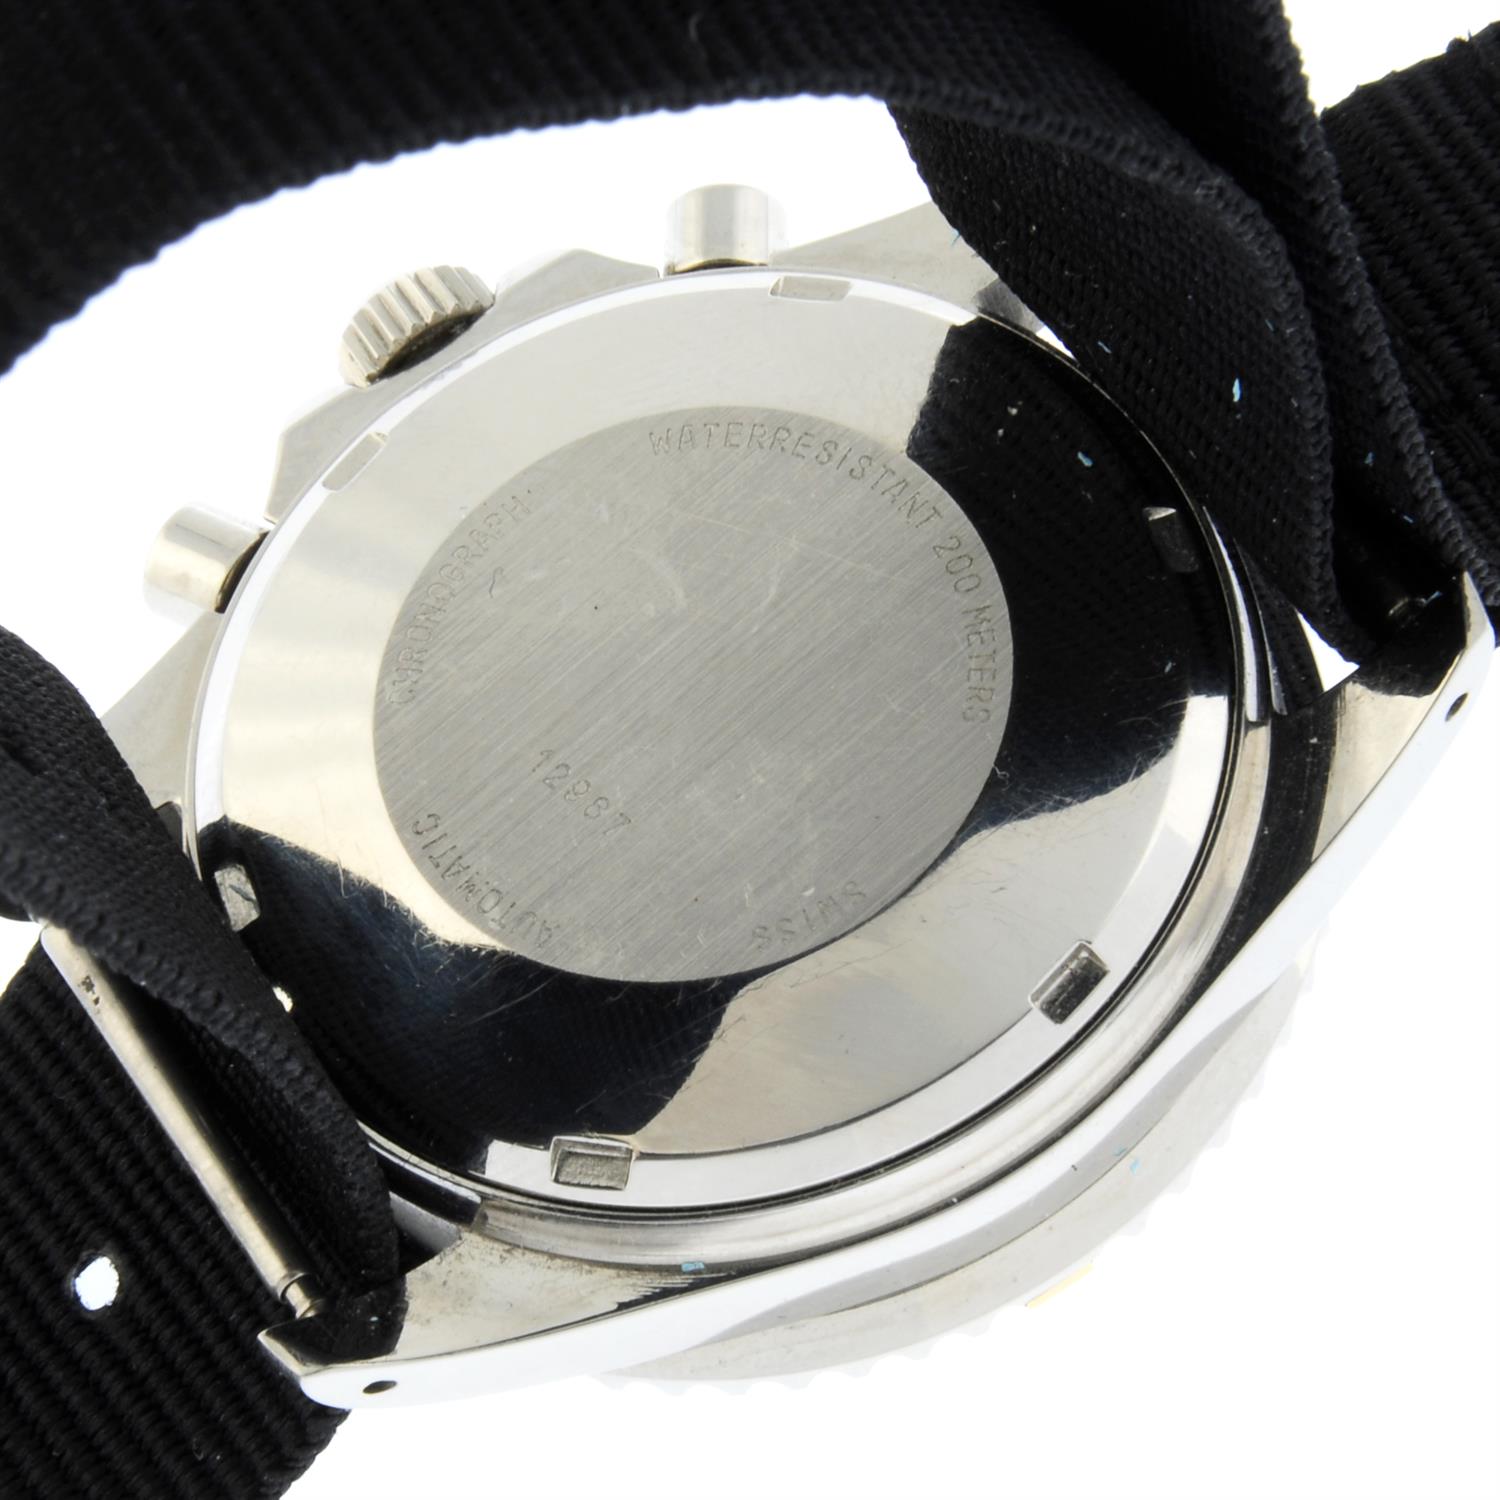 Bucherer - a Sub Professional chronograph watch, 39mm. - Image 4 of 5